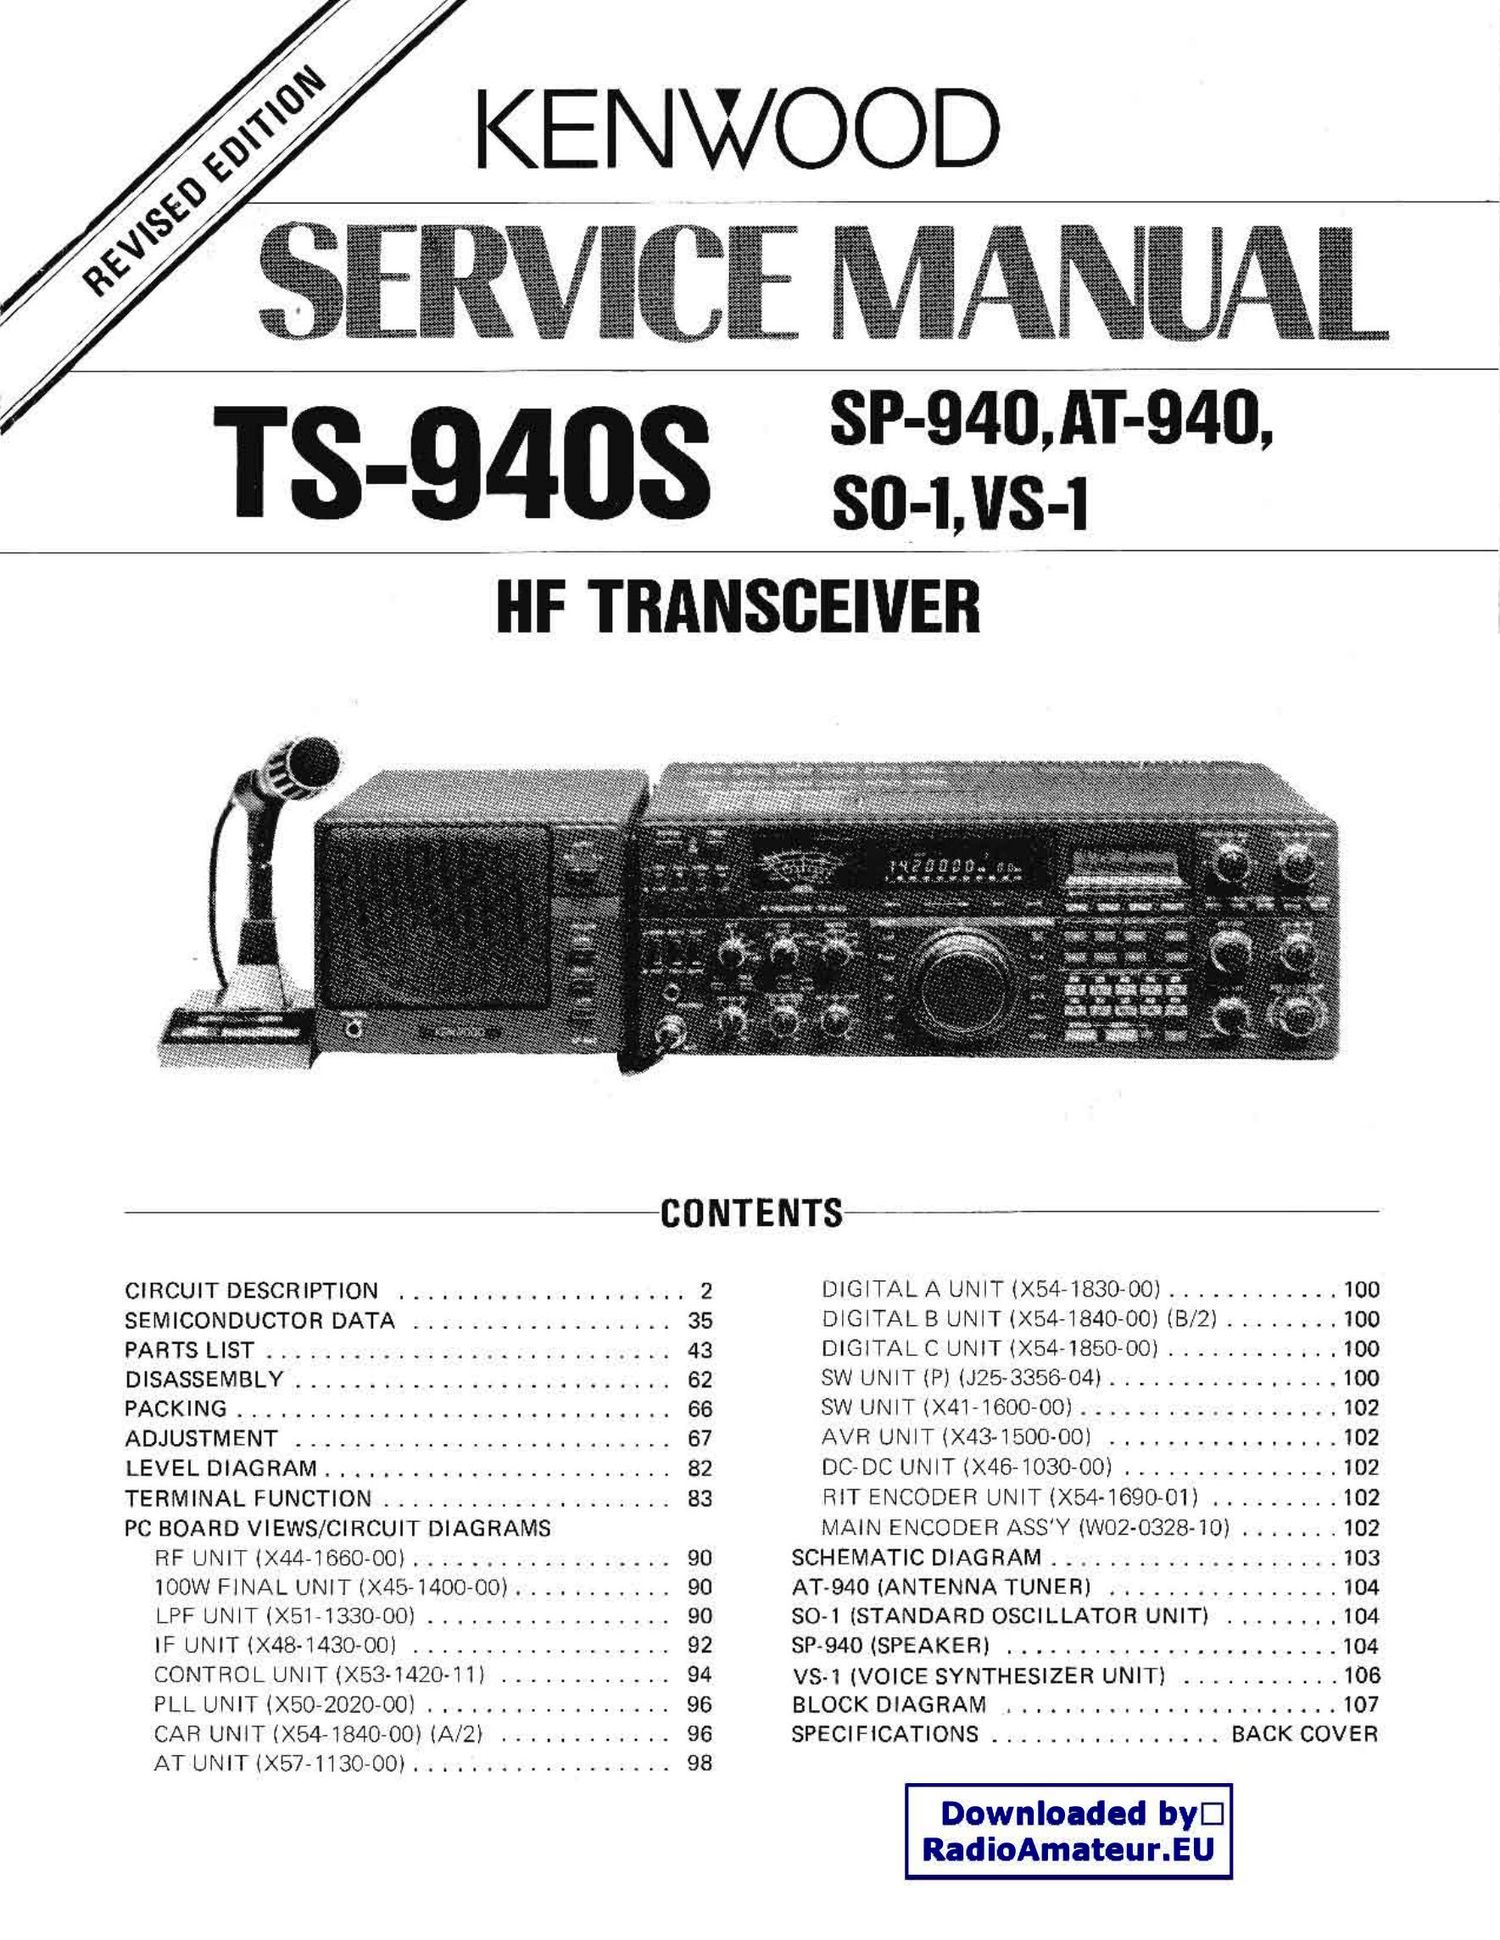 Kenwood TS 940 S Service Manual